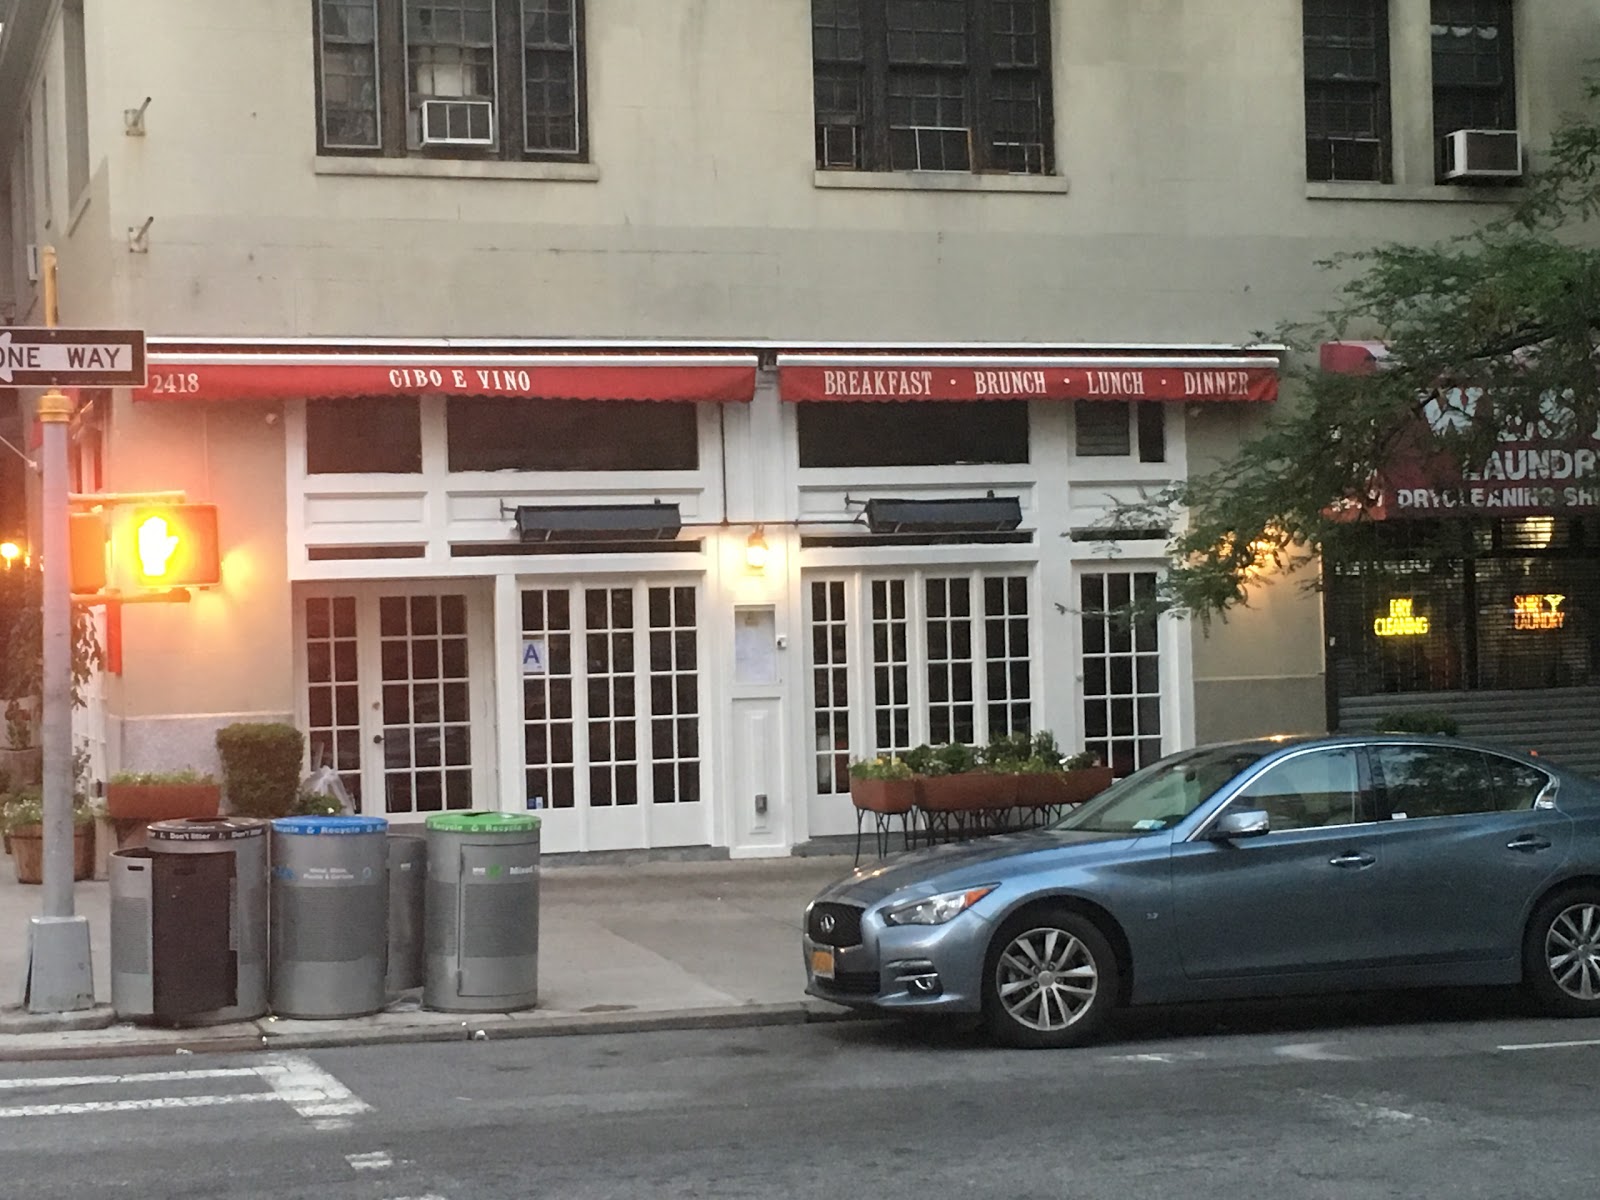 Photo of Cibo e Vino in New York City, New York, United States - 3 Picture of Restaurant, Food, Point of interest, Establishment